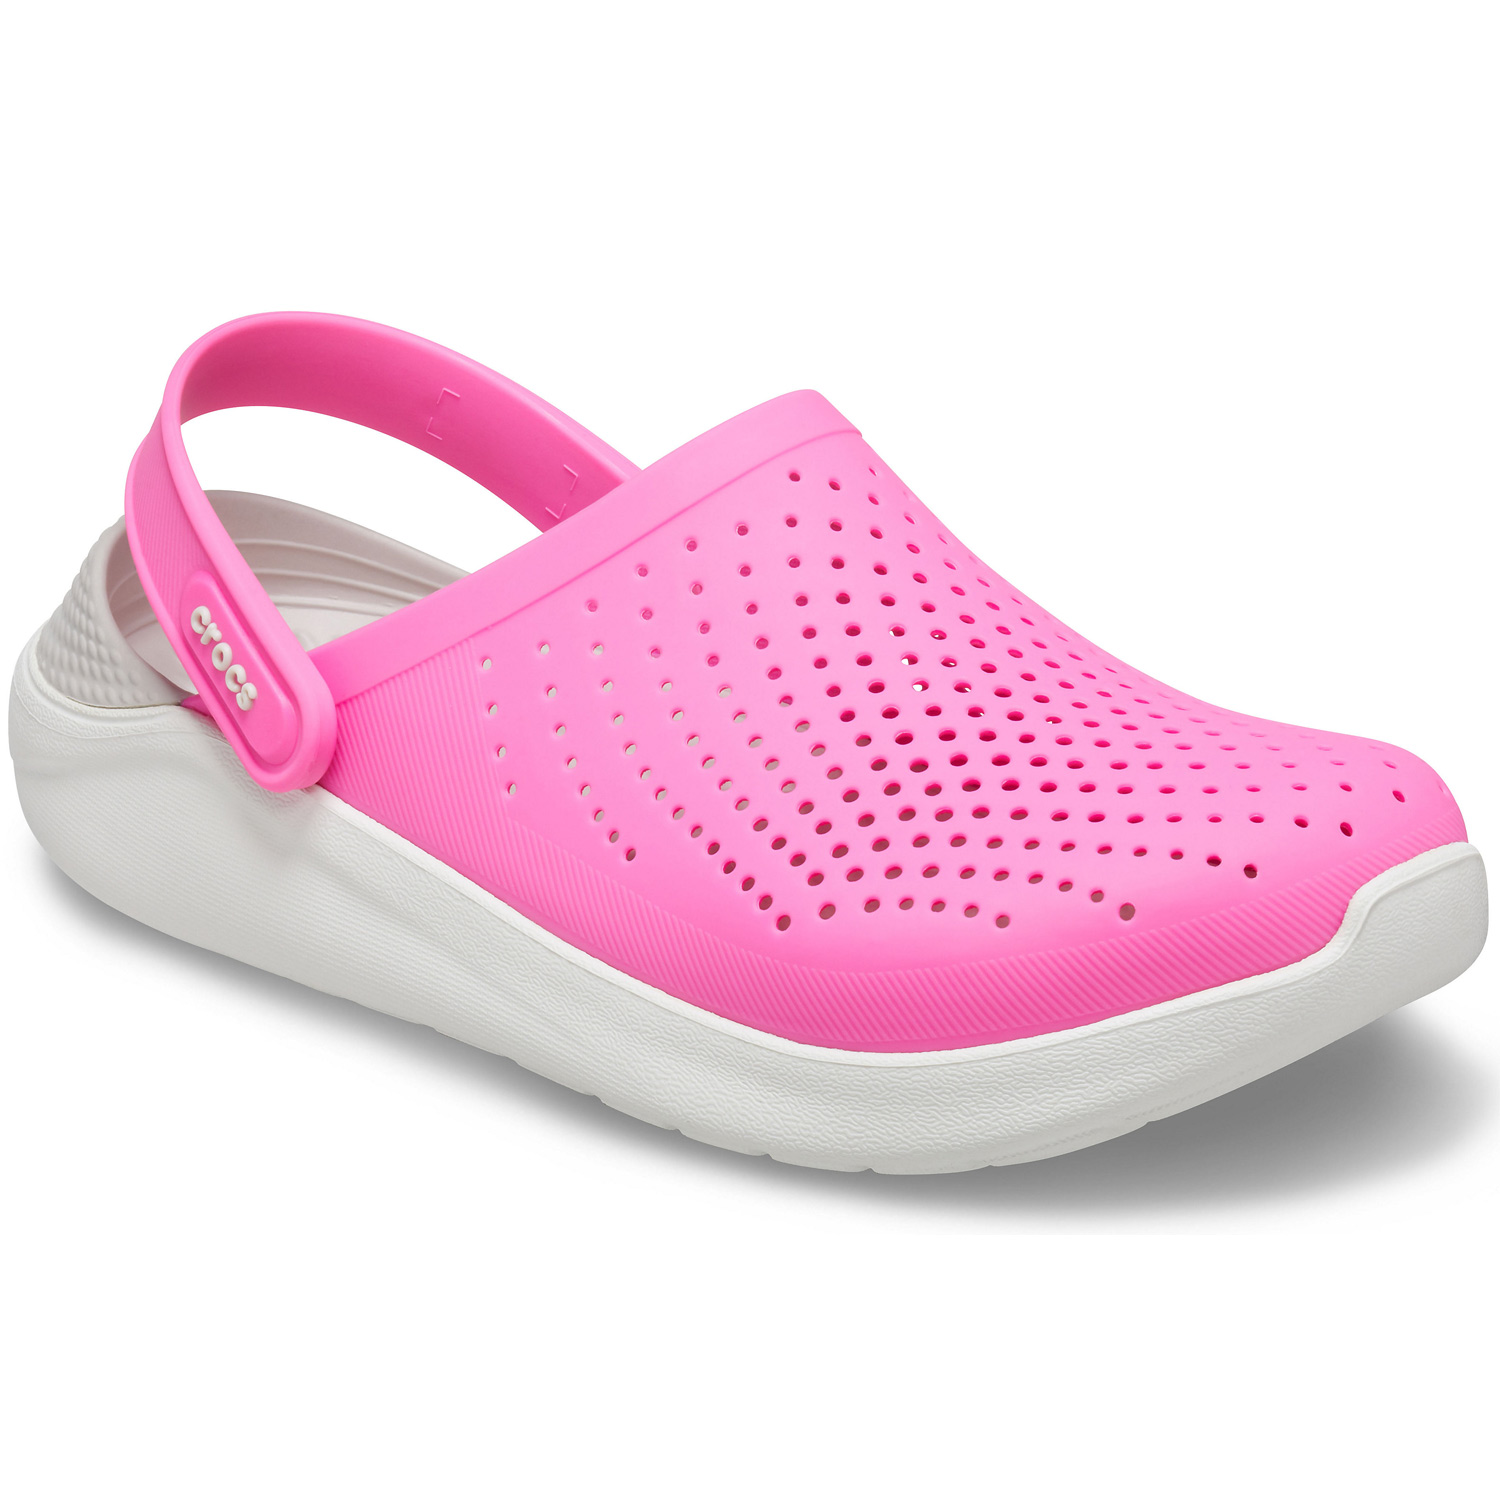 crocs for women pink